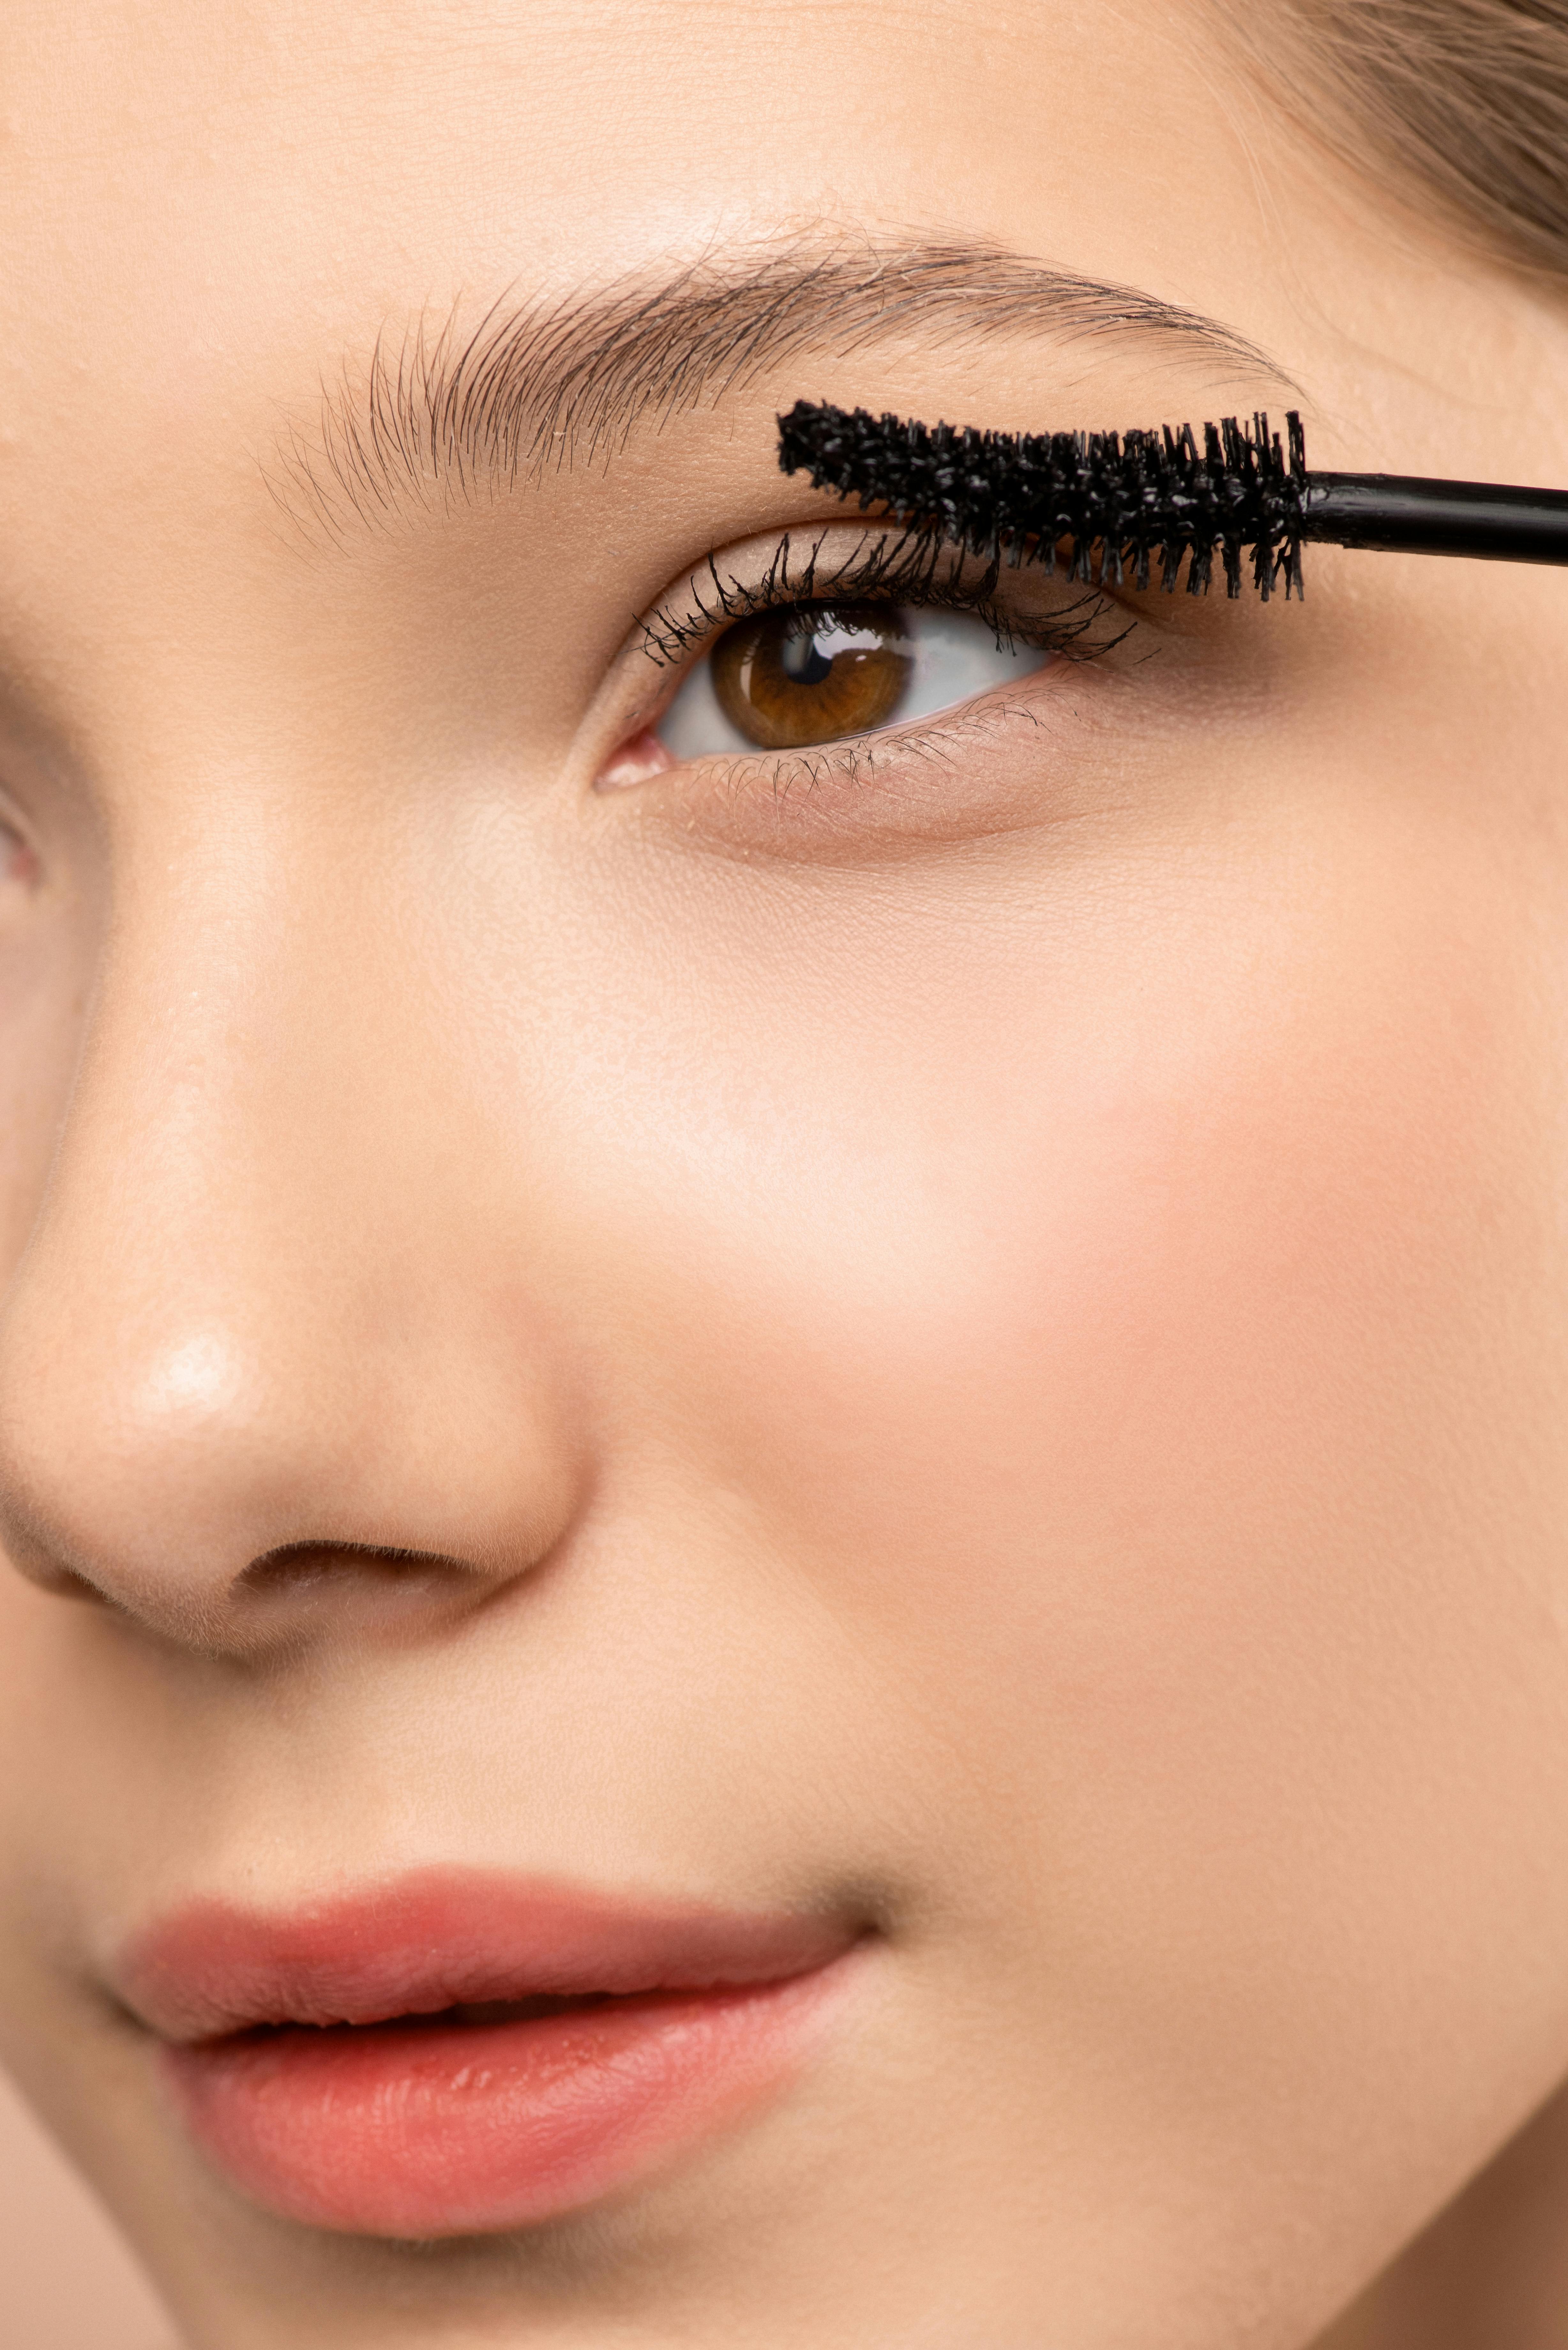 A woman applying mascara | Source: Pexels